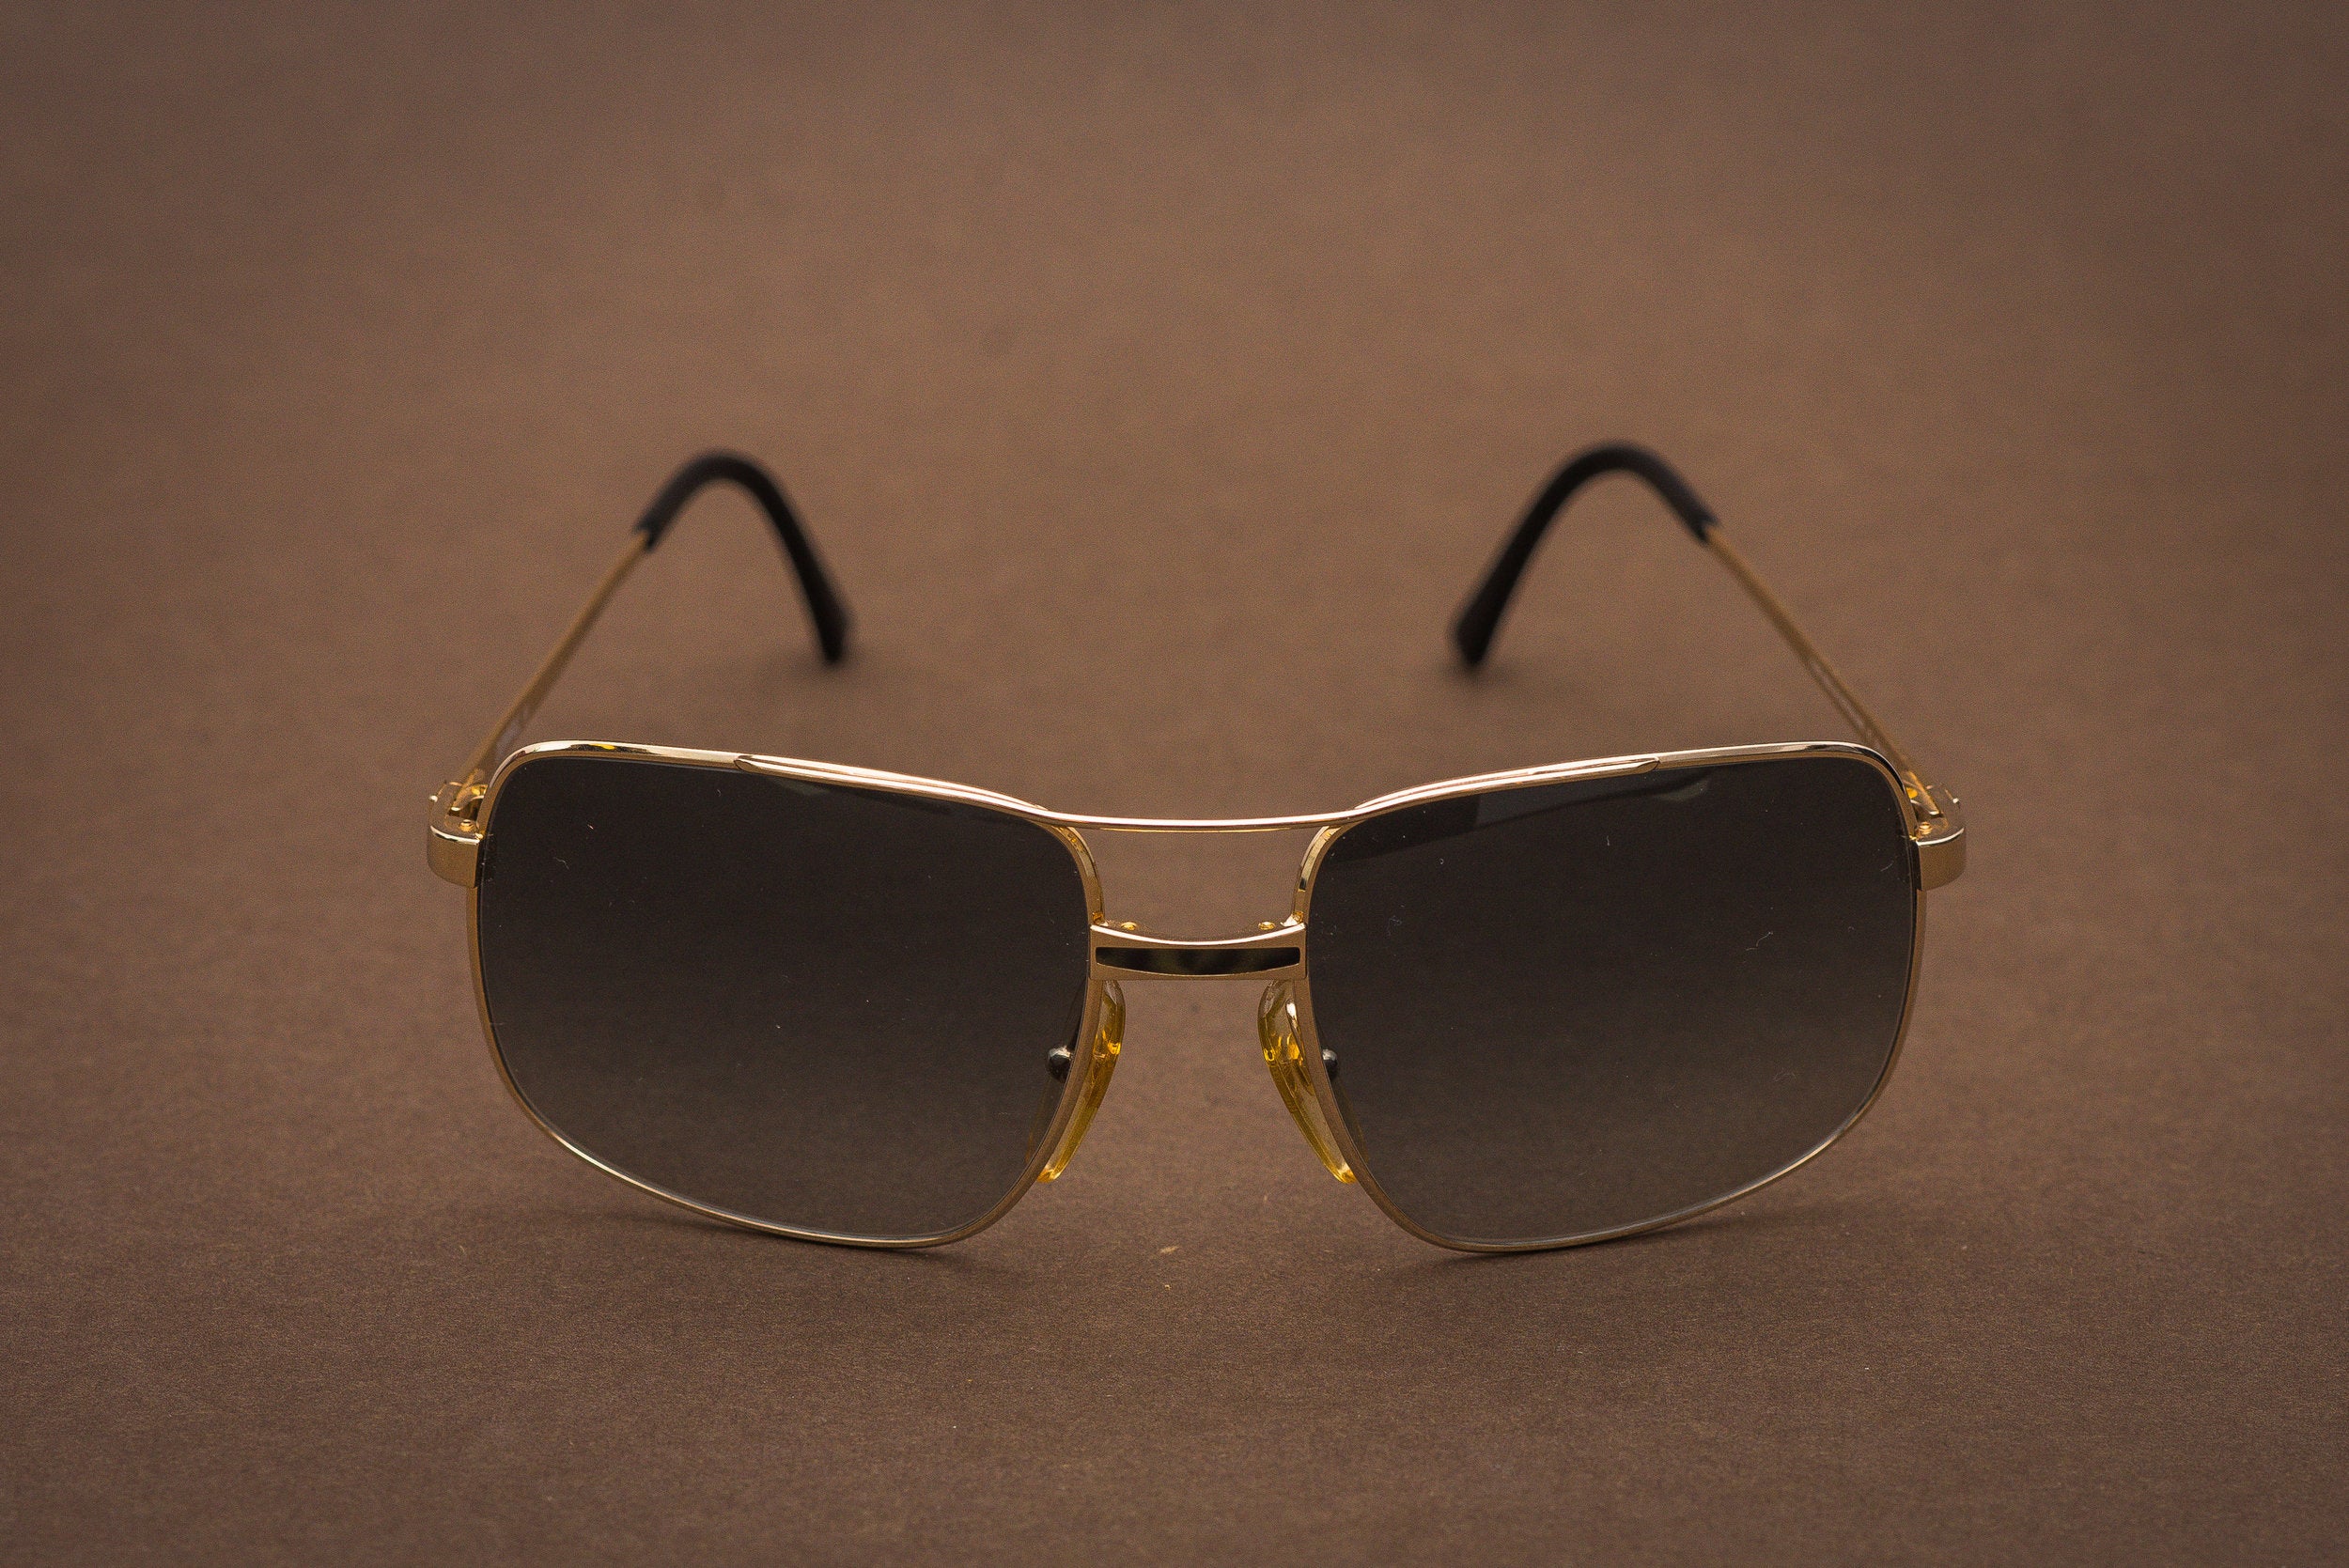 Dunhill 6048 sunglasses